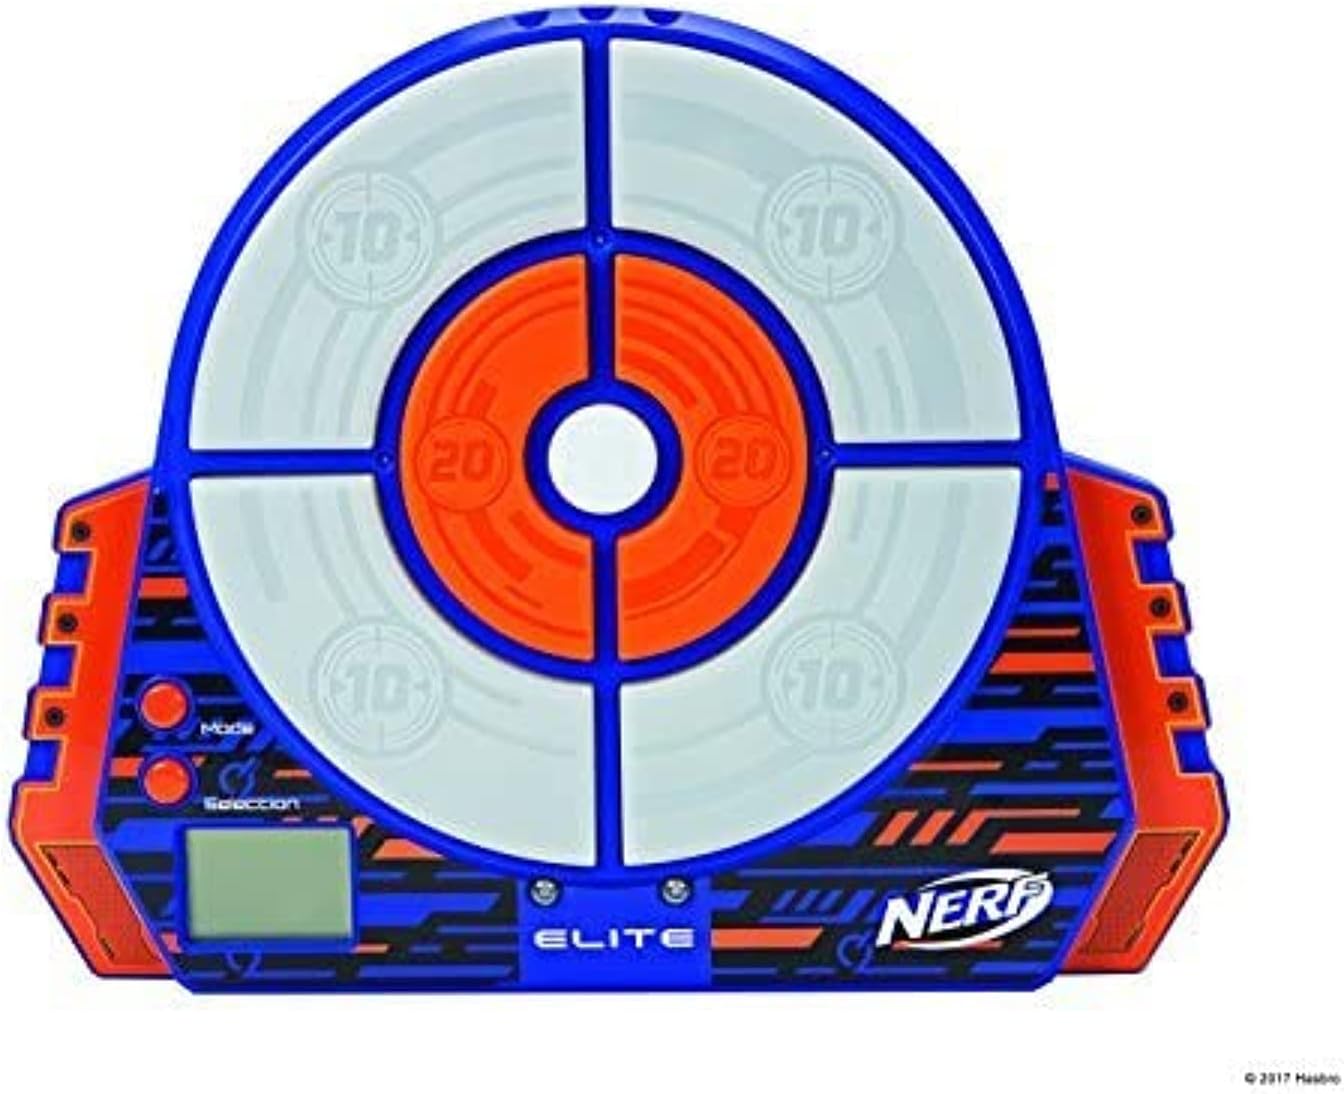 NERF NER0156 Elite Digital Target Game, Multi